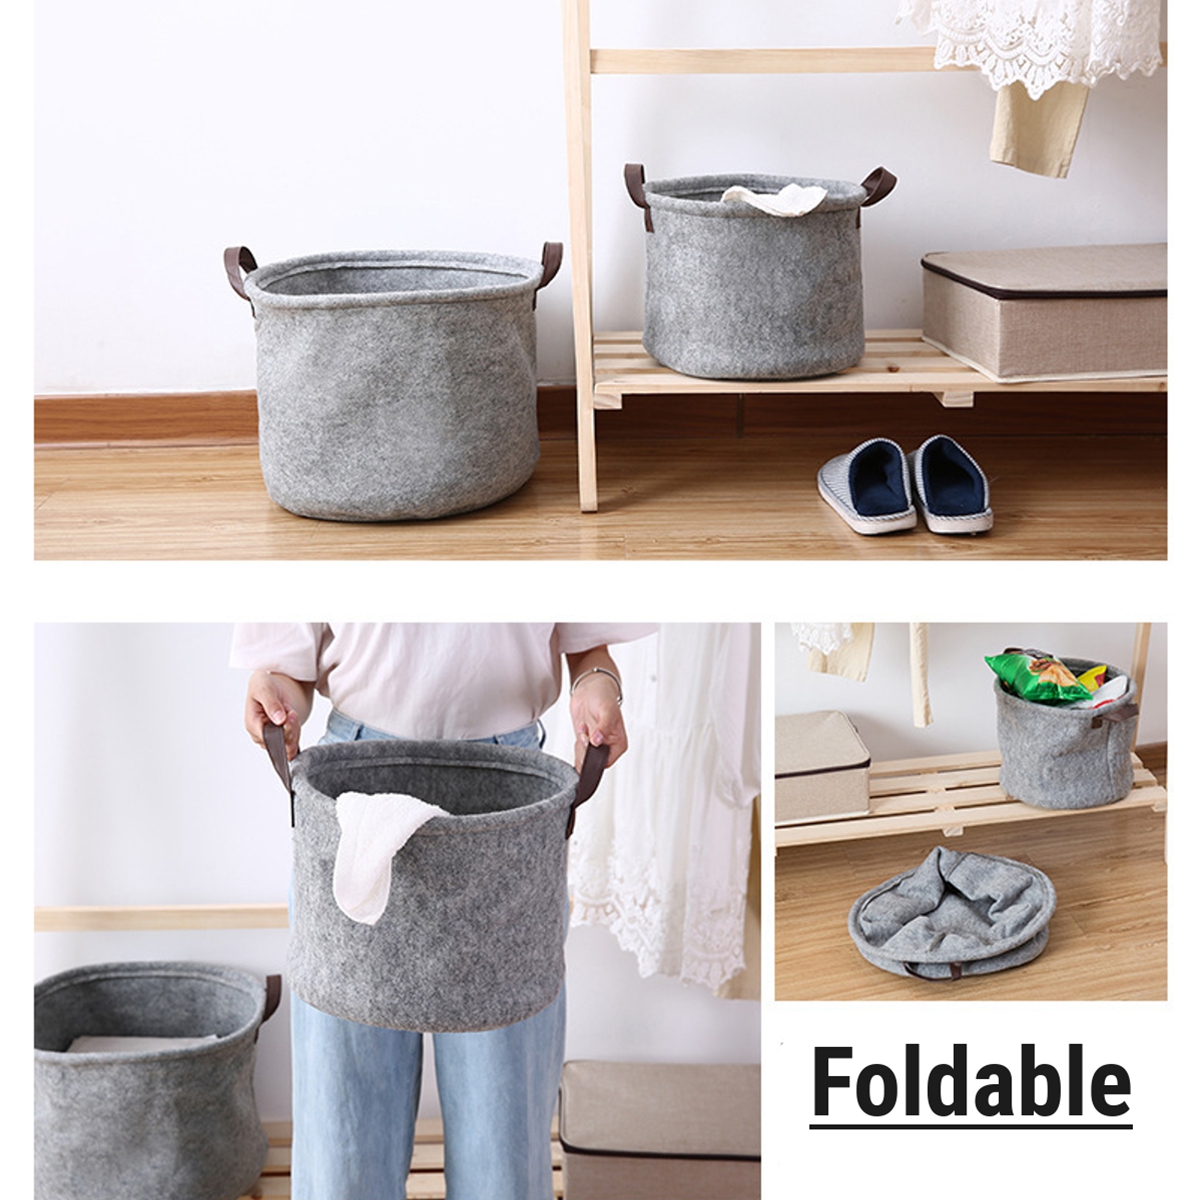 Foldable-Felt-Storage-Laundry-Hamper-Clothes-Basket-Bin-Toy-Hamper-with-Handle-Felt-Storage-Basket-B-1841073-2